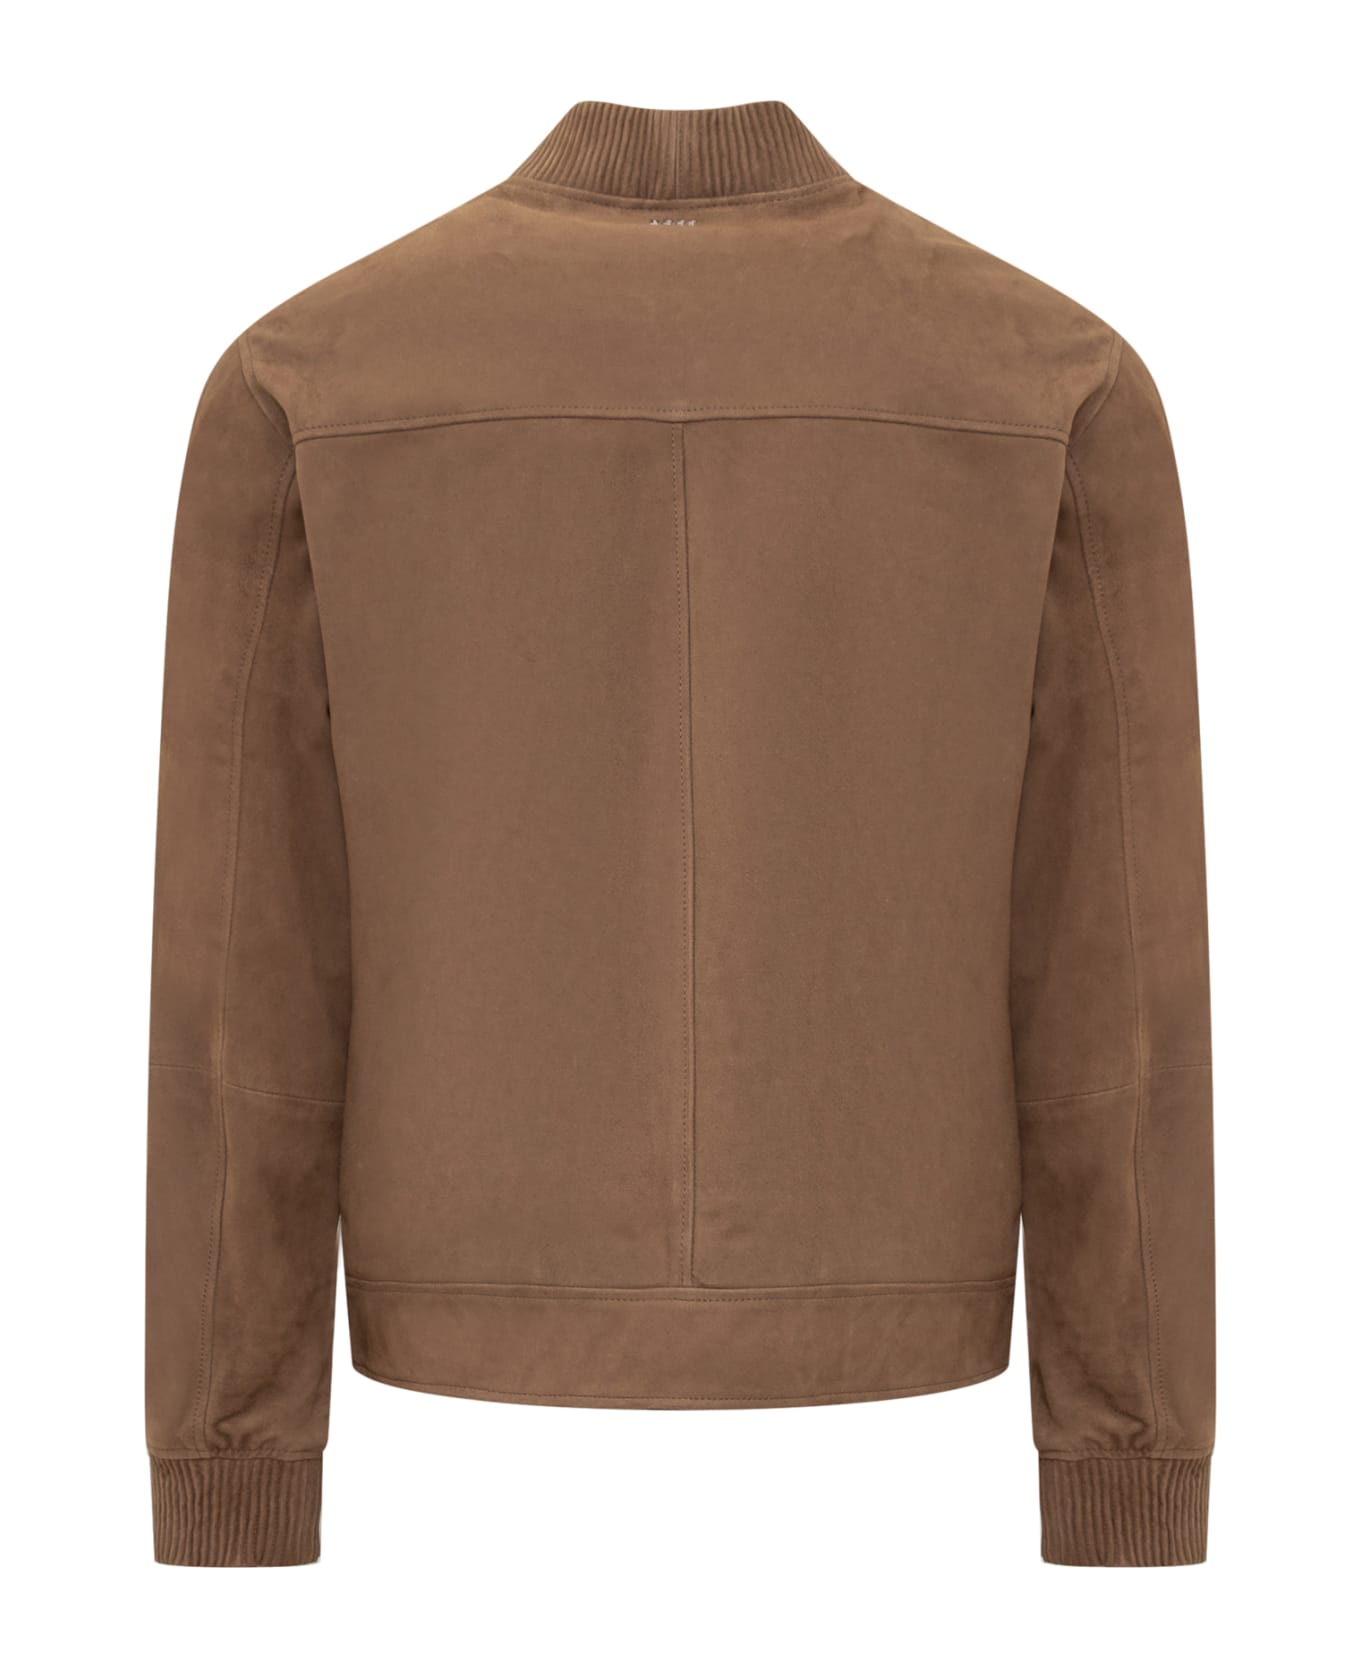 Hugo Boss Lambskin Leather Jacket - Brown